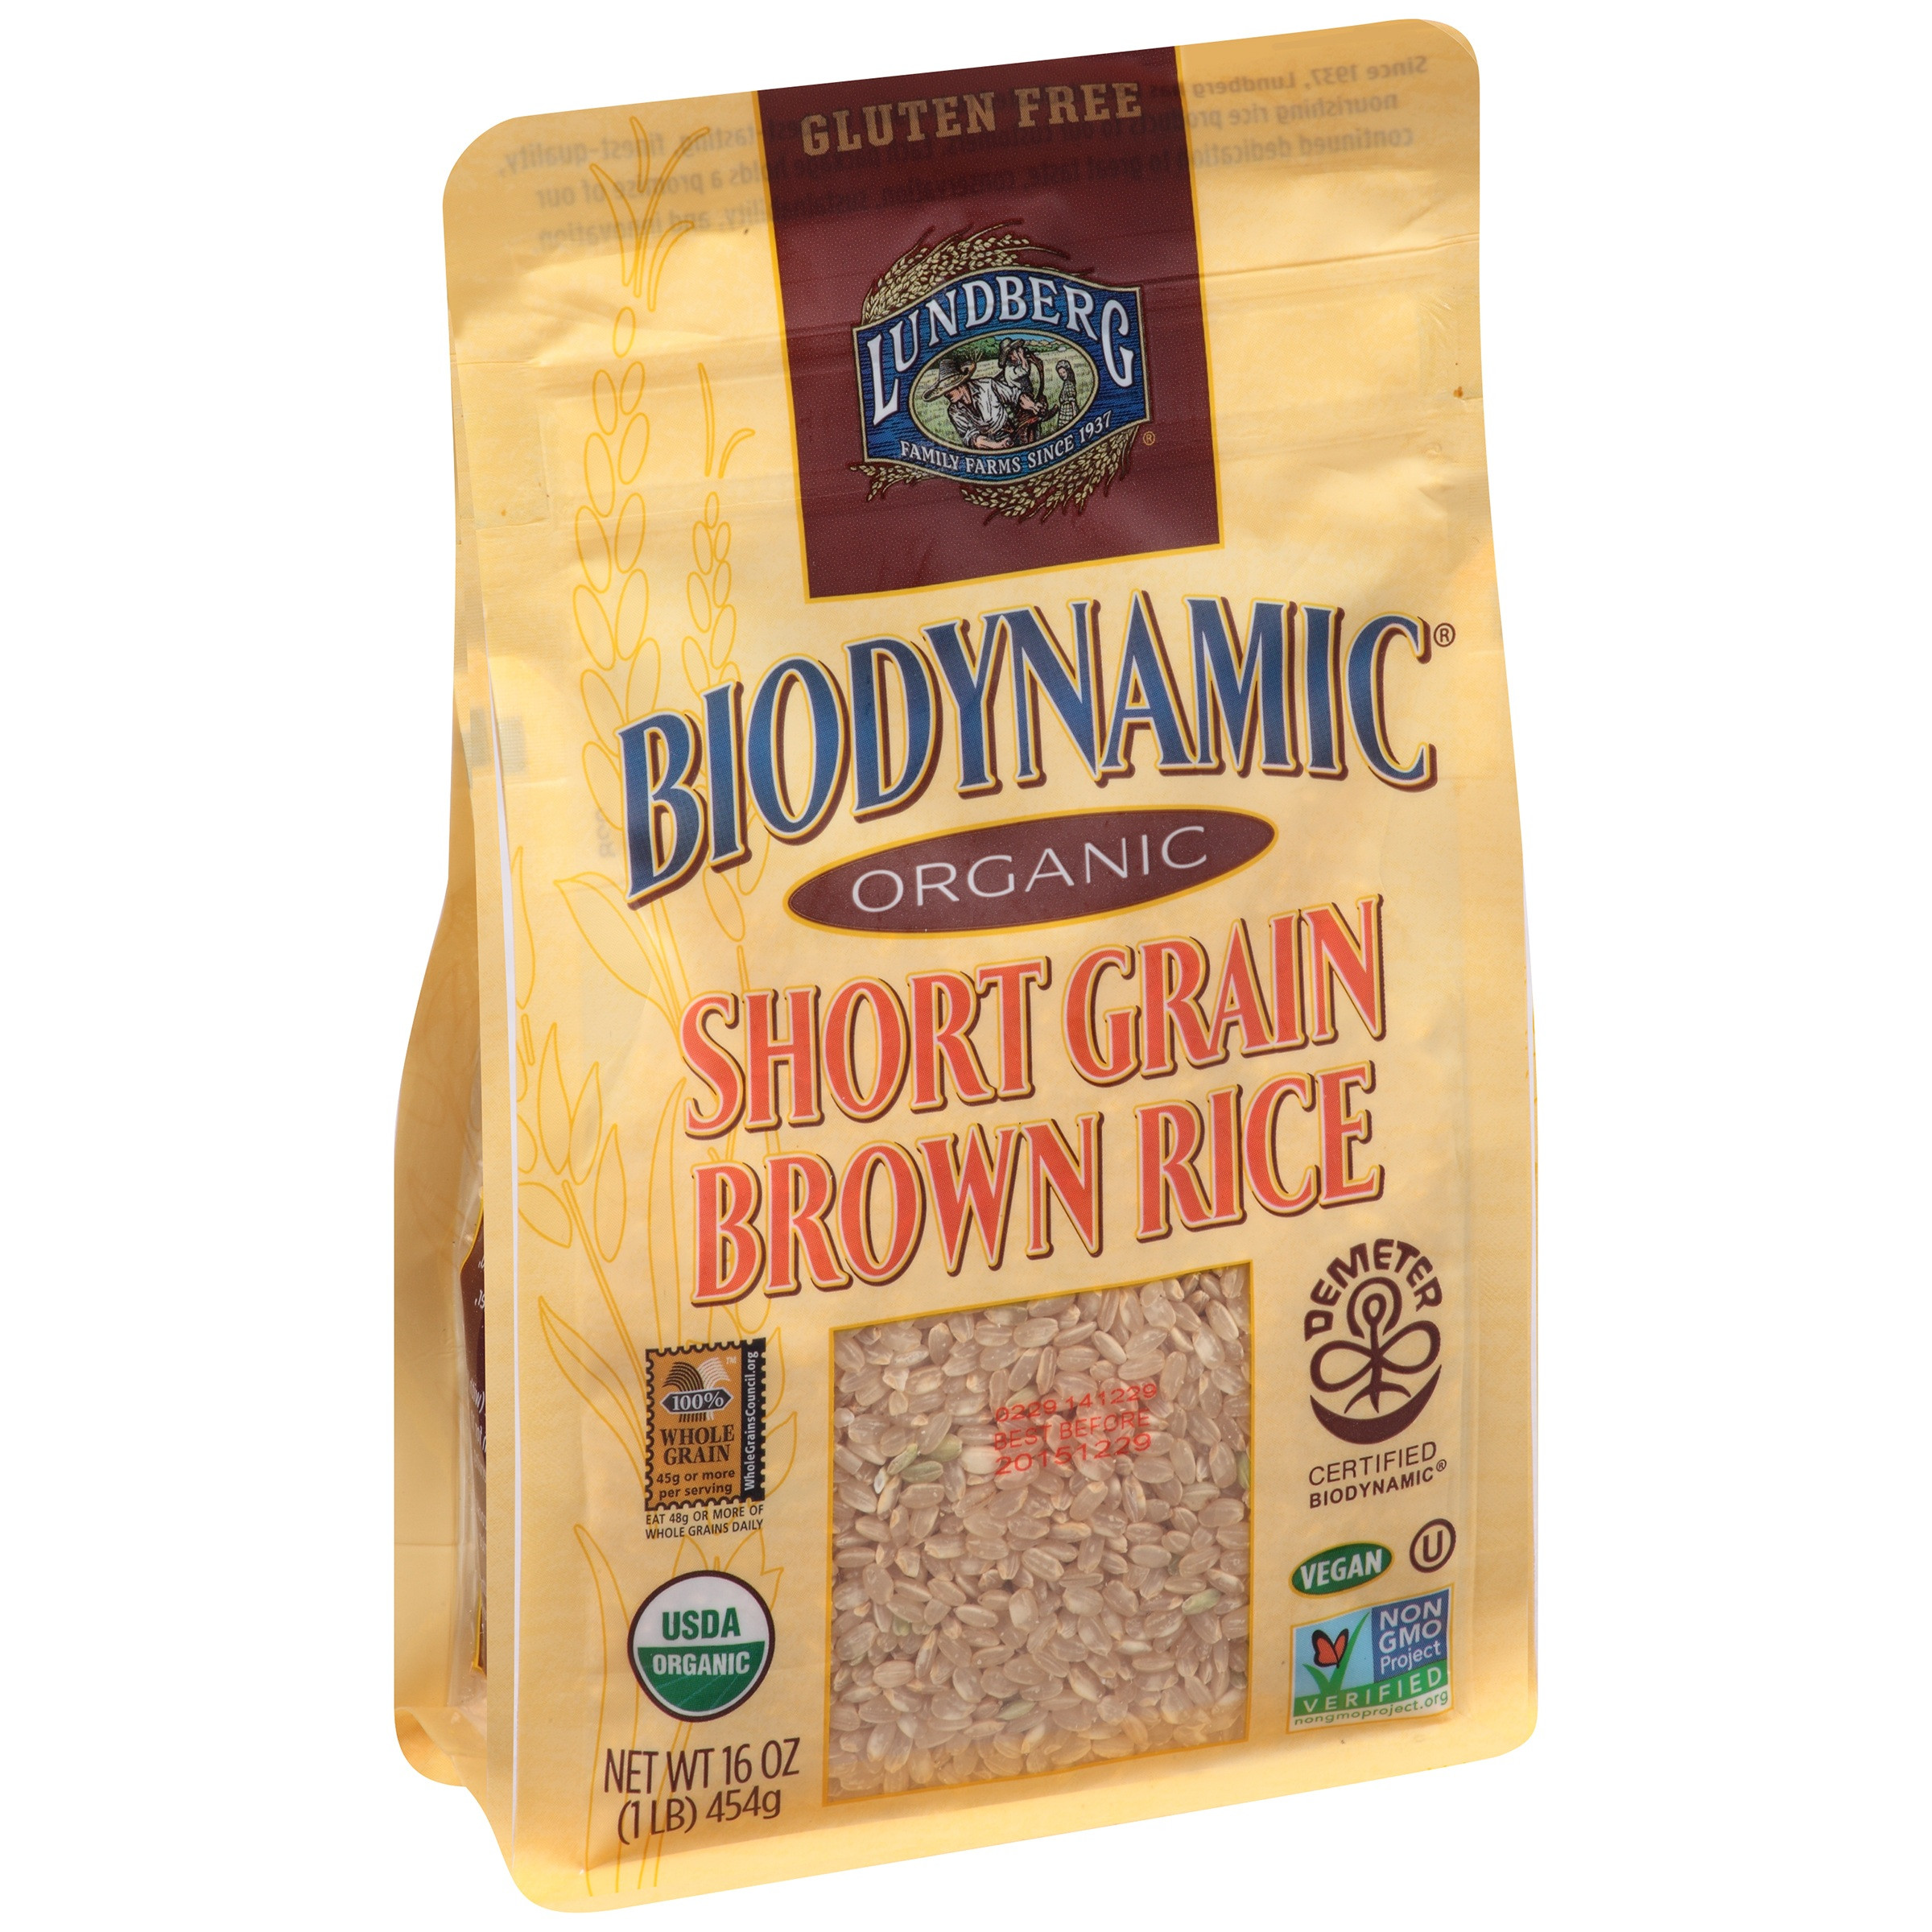 Lundberg Short Grain Brown Rice
 Lundberg Biodynamic Organic Short Grain Brown Rice 16 oz